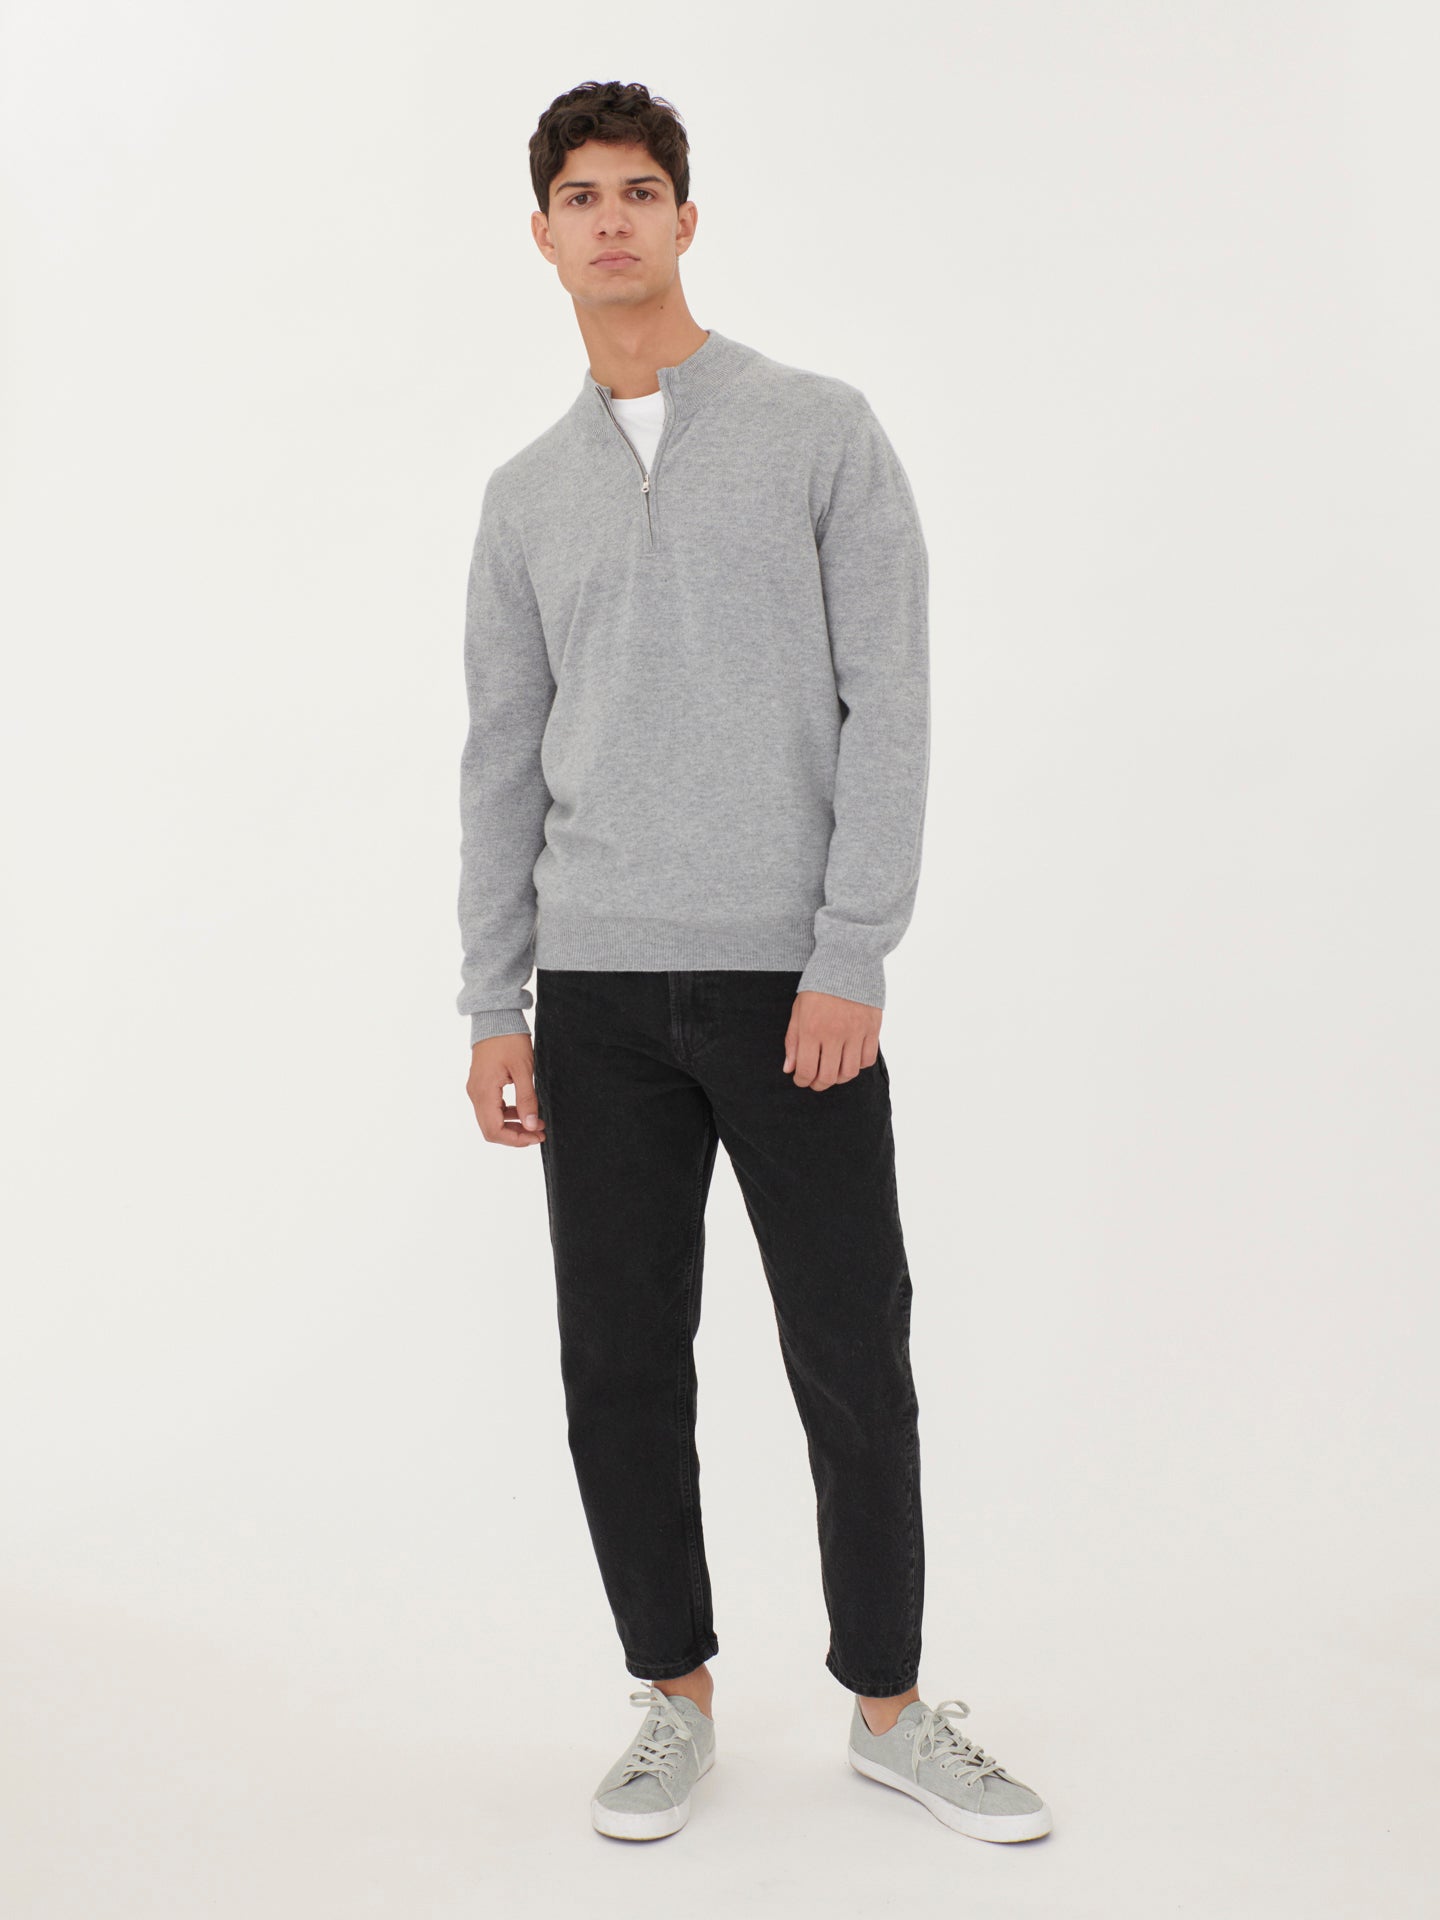 Men's Cashmere Half Zip Sweater Light Gray - Gobi Cashmere